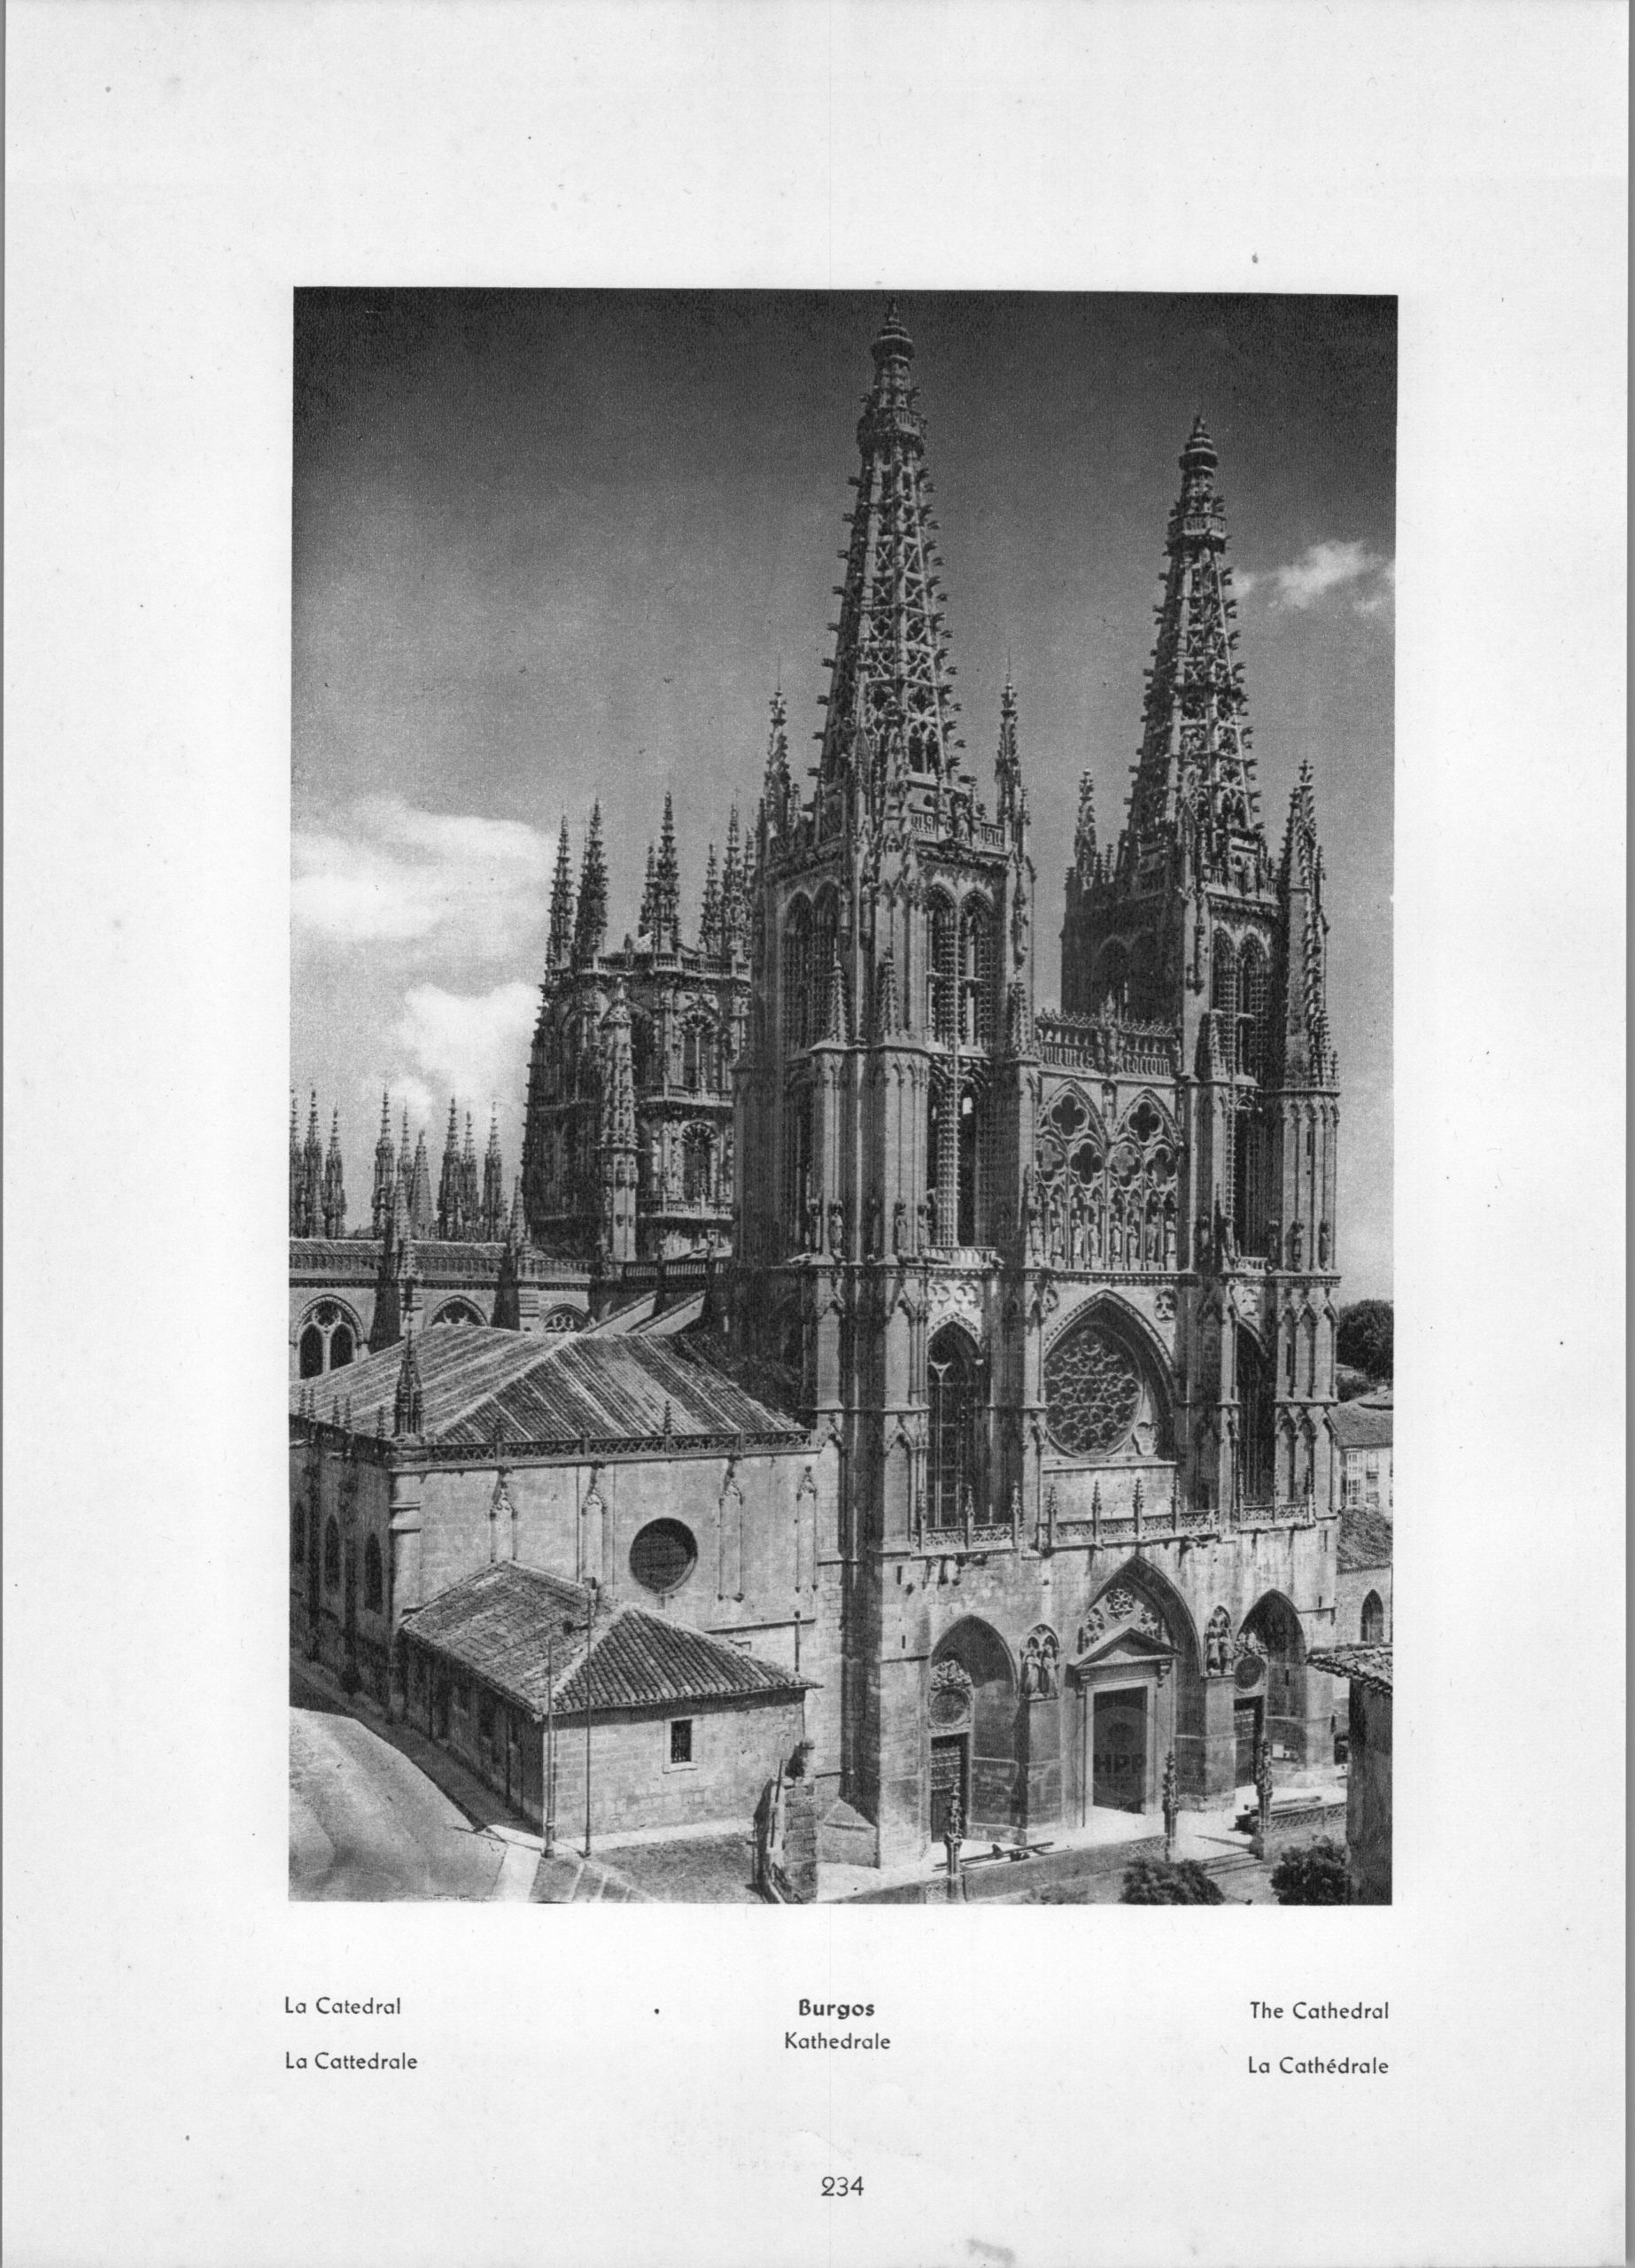 Burgos - La Catedral